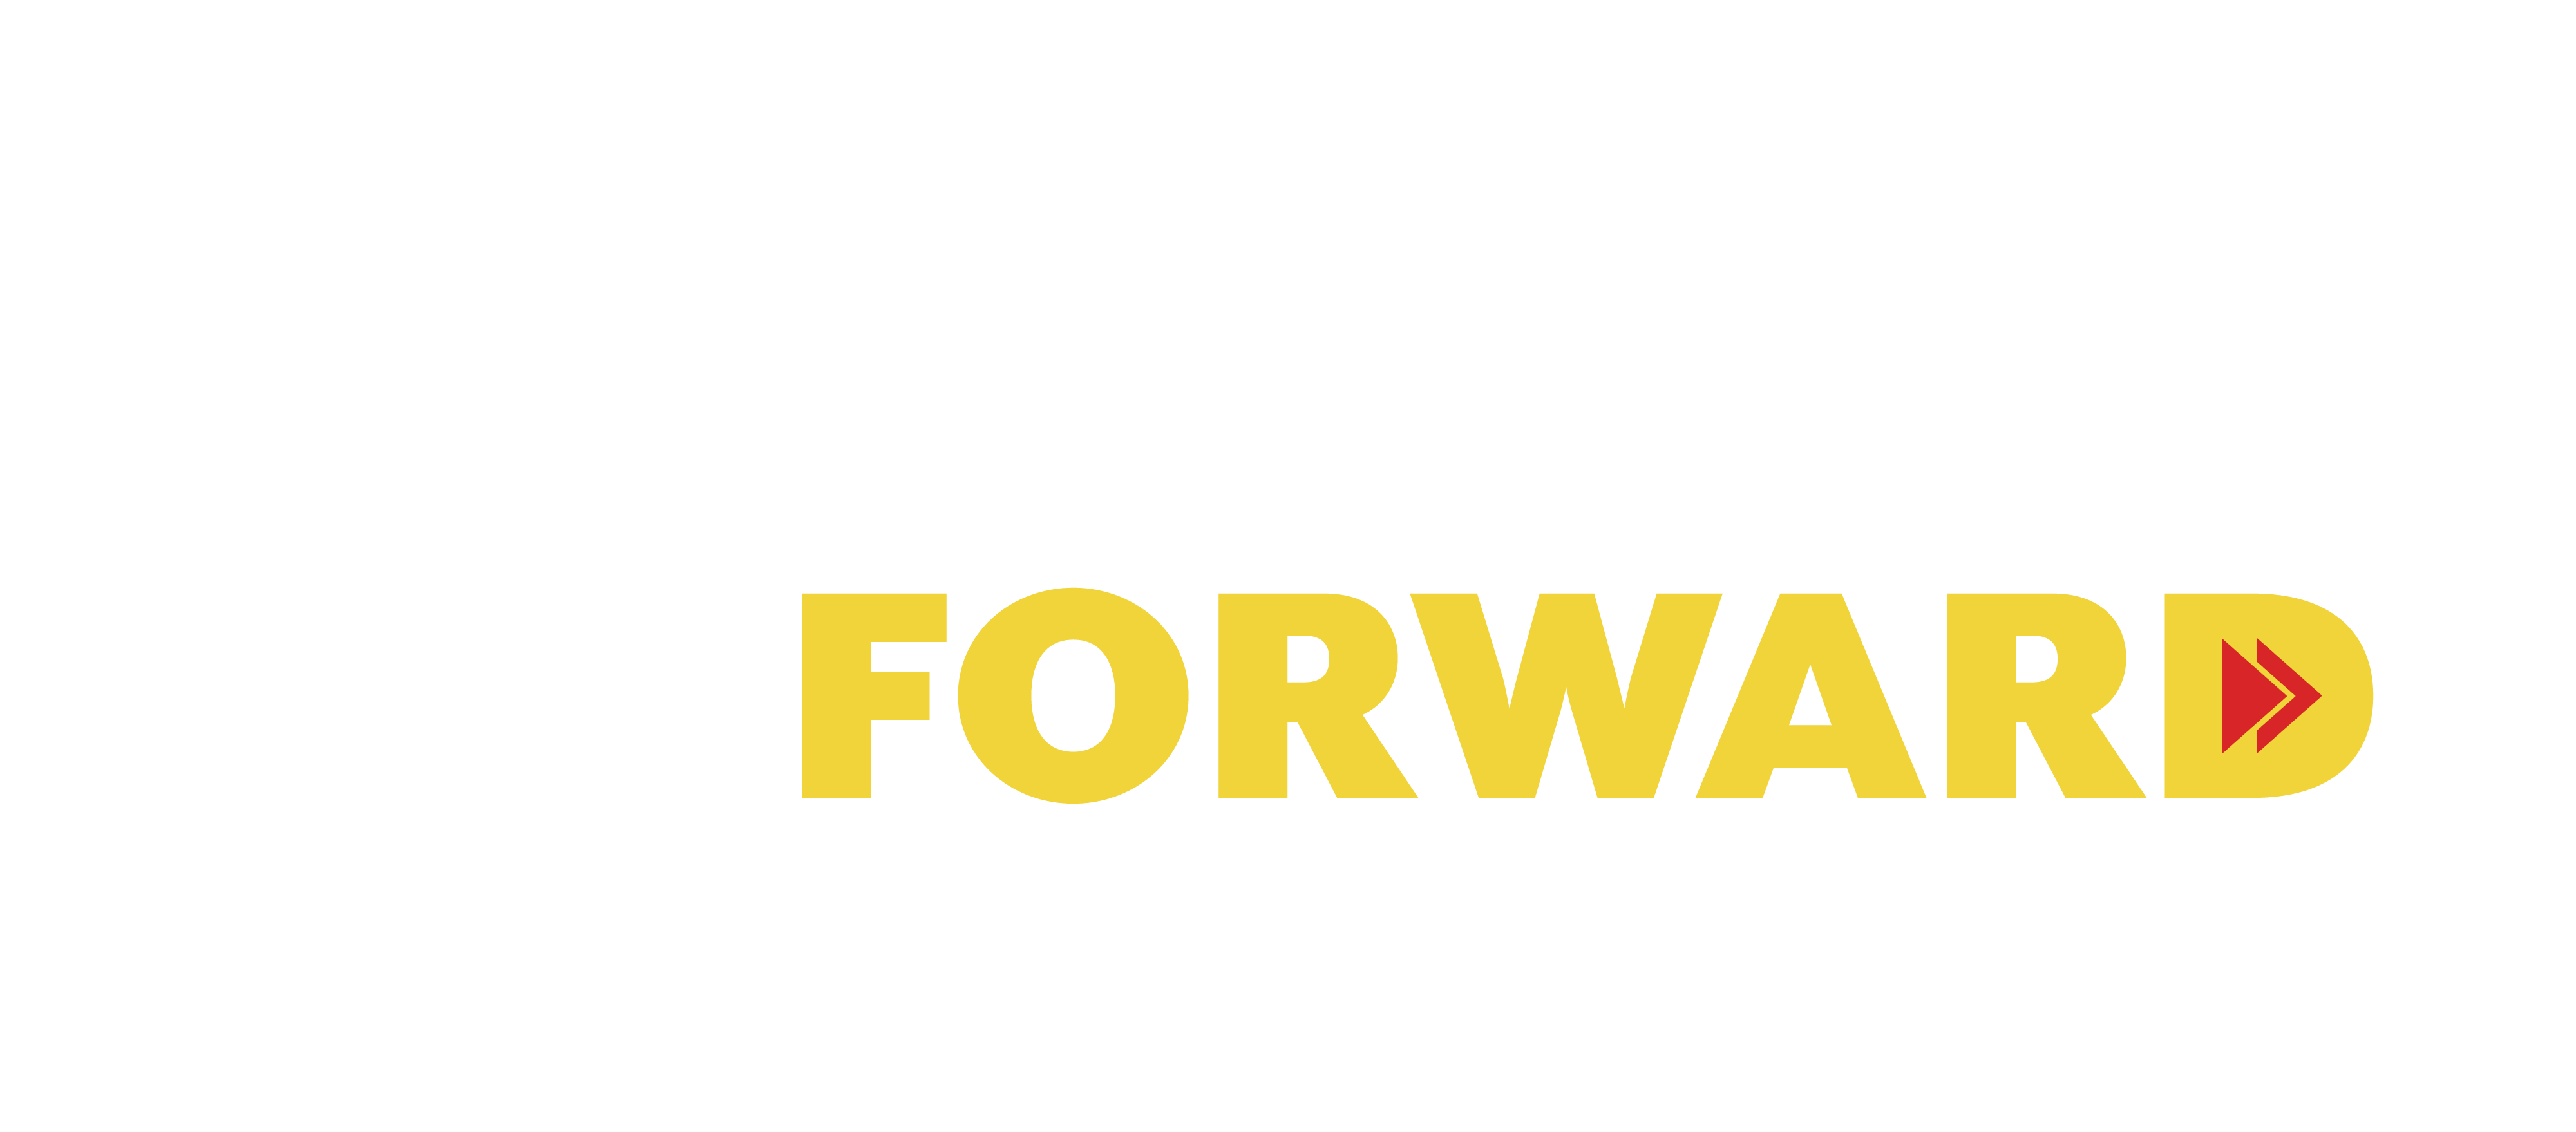 Car Forward